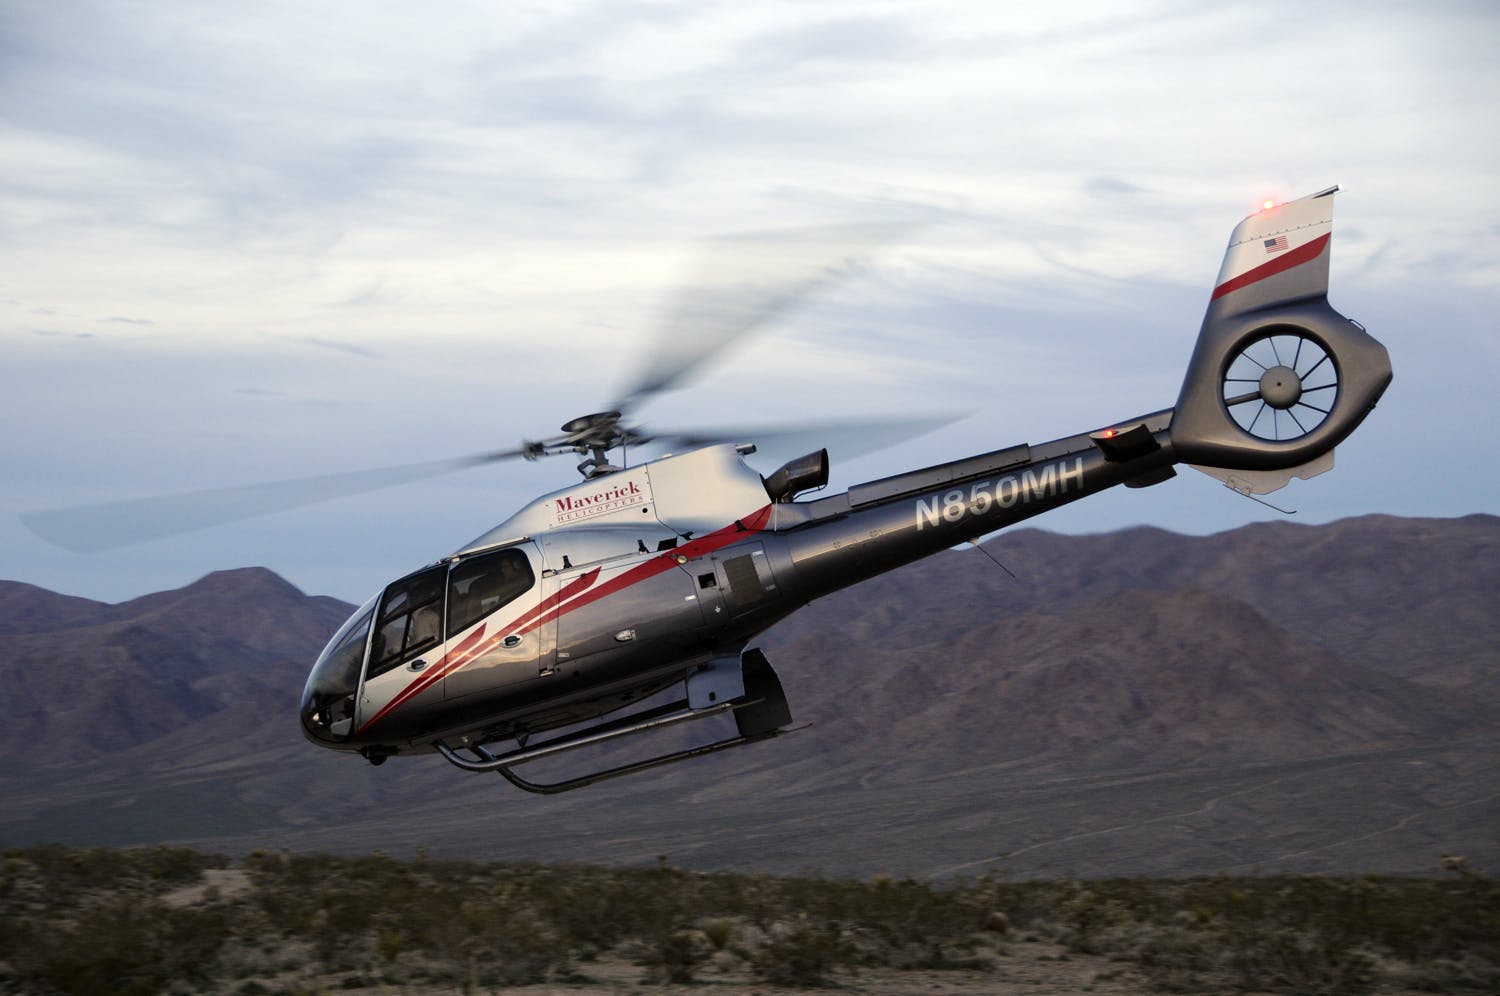 Wind Dancer Grand Canyon helikopter tour met landing